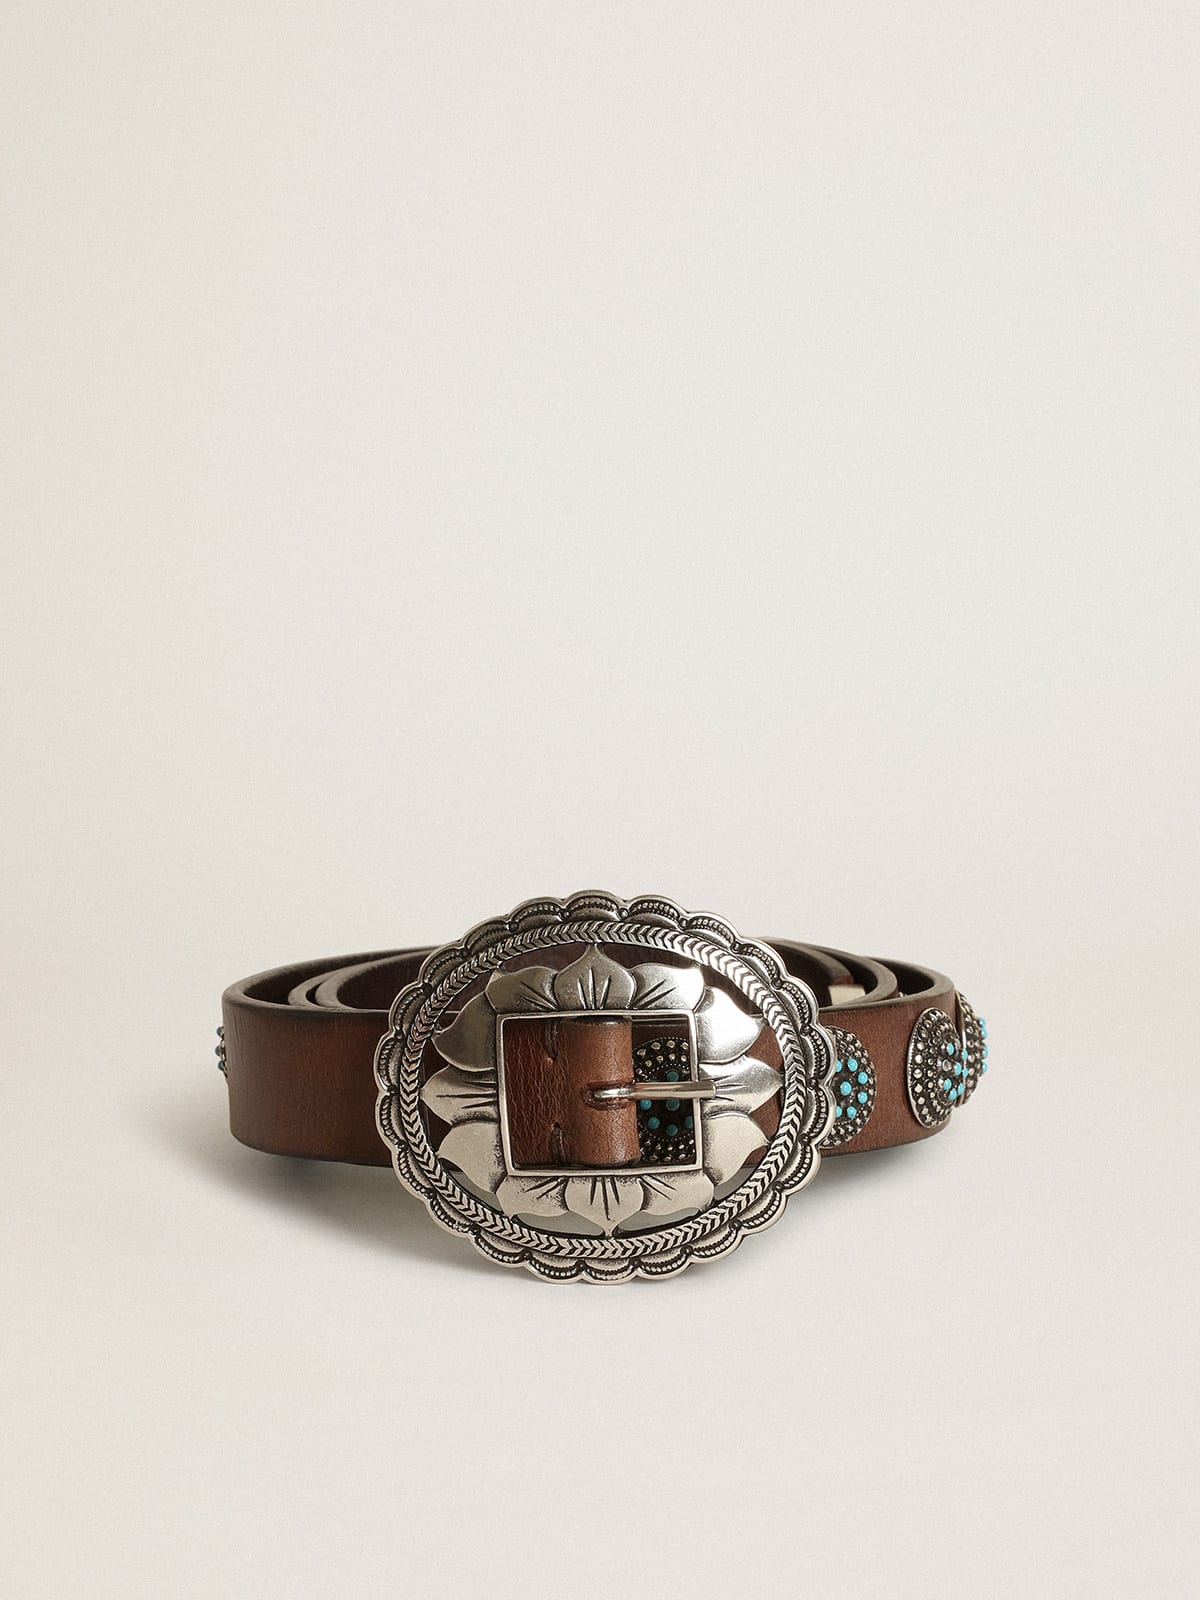 Golden Goose - Women's belt in dark brown leather with silver studs in 